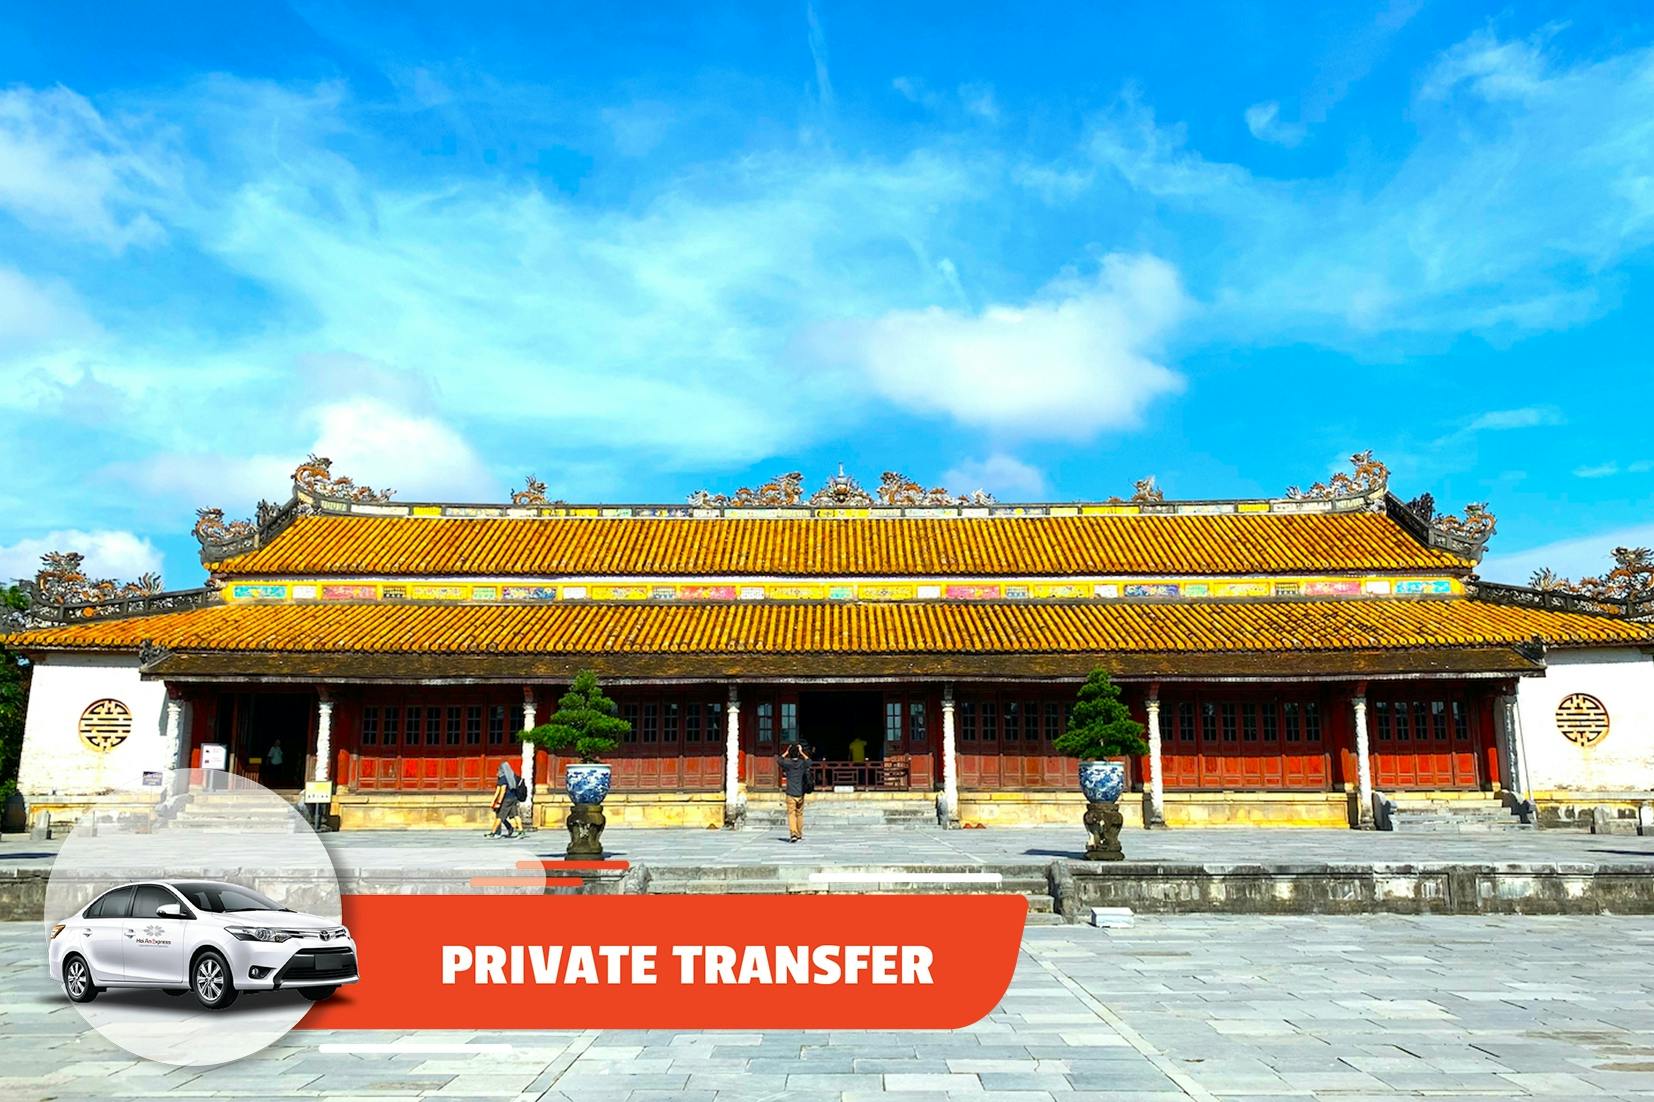 Prywatny transfer z lotniska Da Nang do hotelu w centrum Hue lub odwrotnie